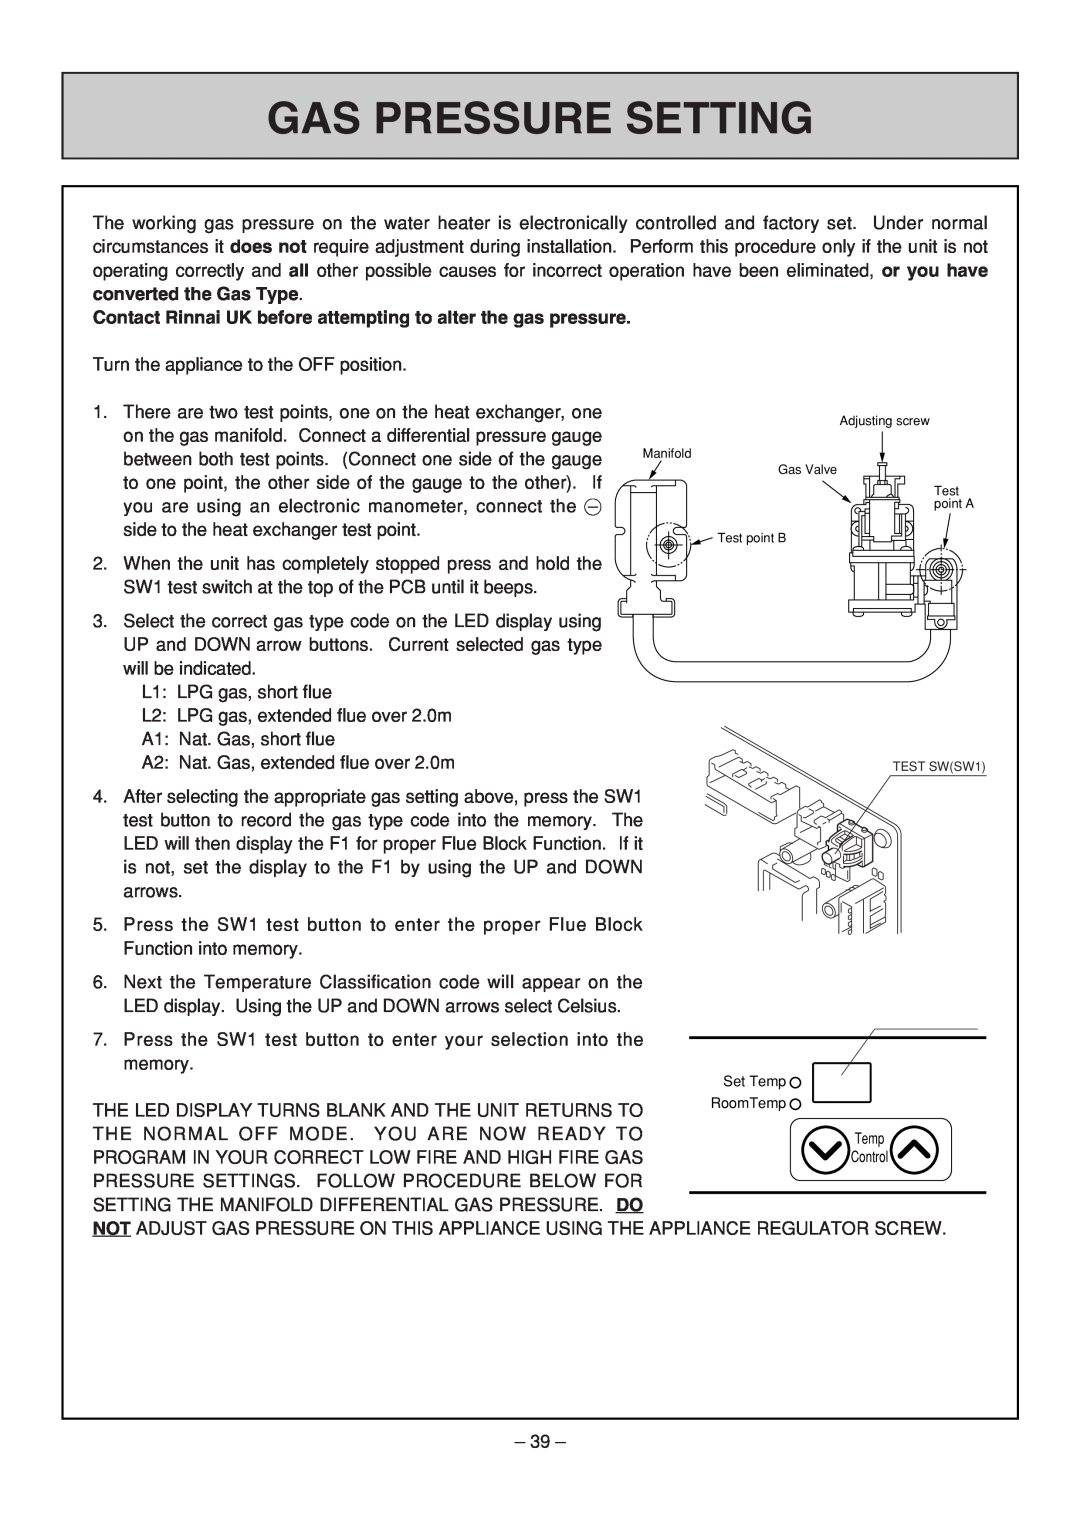 Rinnai RHFE-308 FTR user manual Gas Pressure Setting, converted the Gas Type 